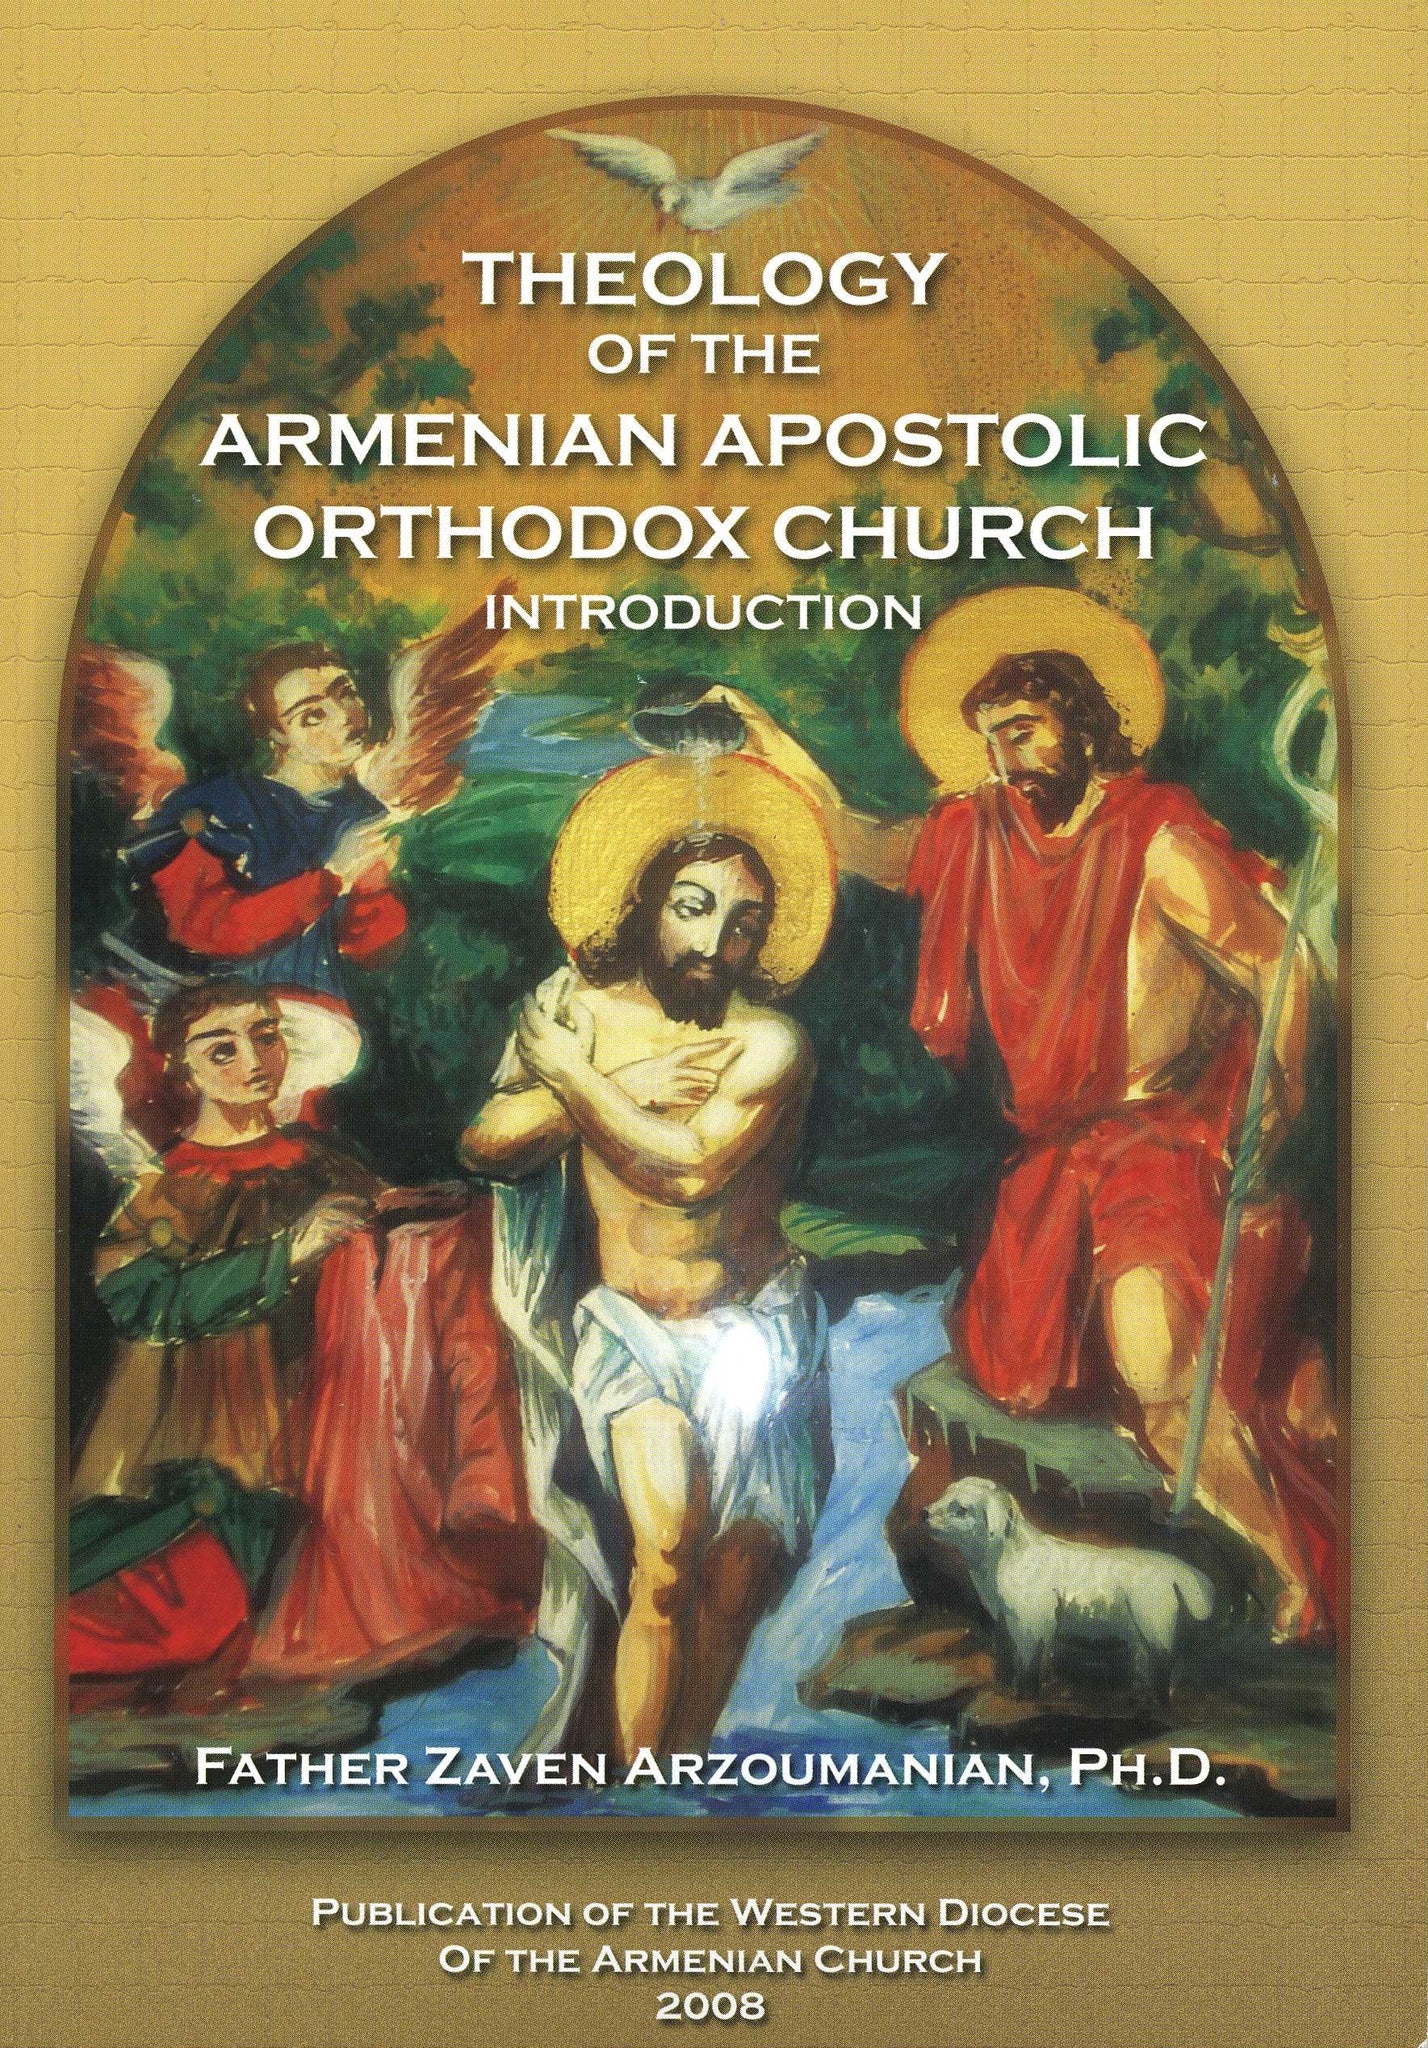 THEOLOGY OF THE ARMENIAN APOSTOLIC ORTHODOX CHURCH